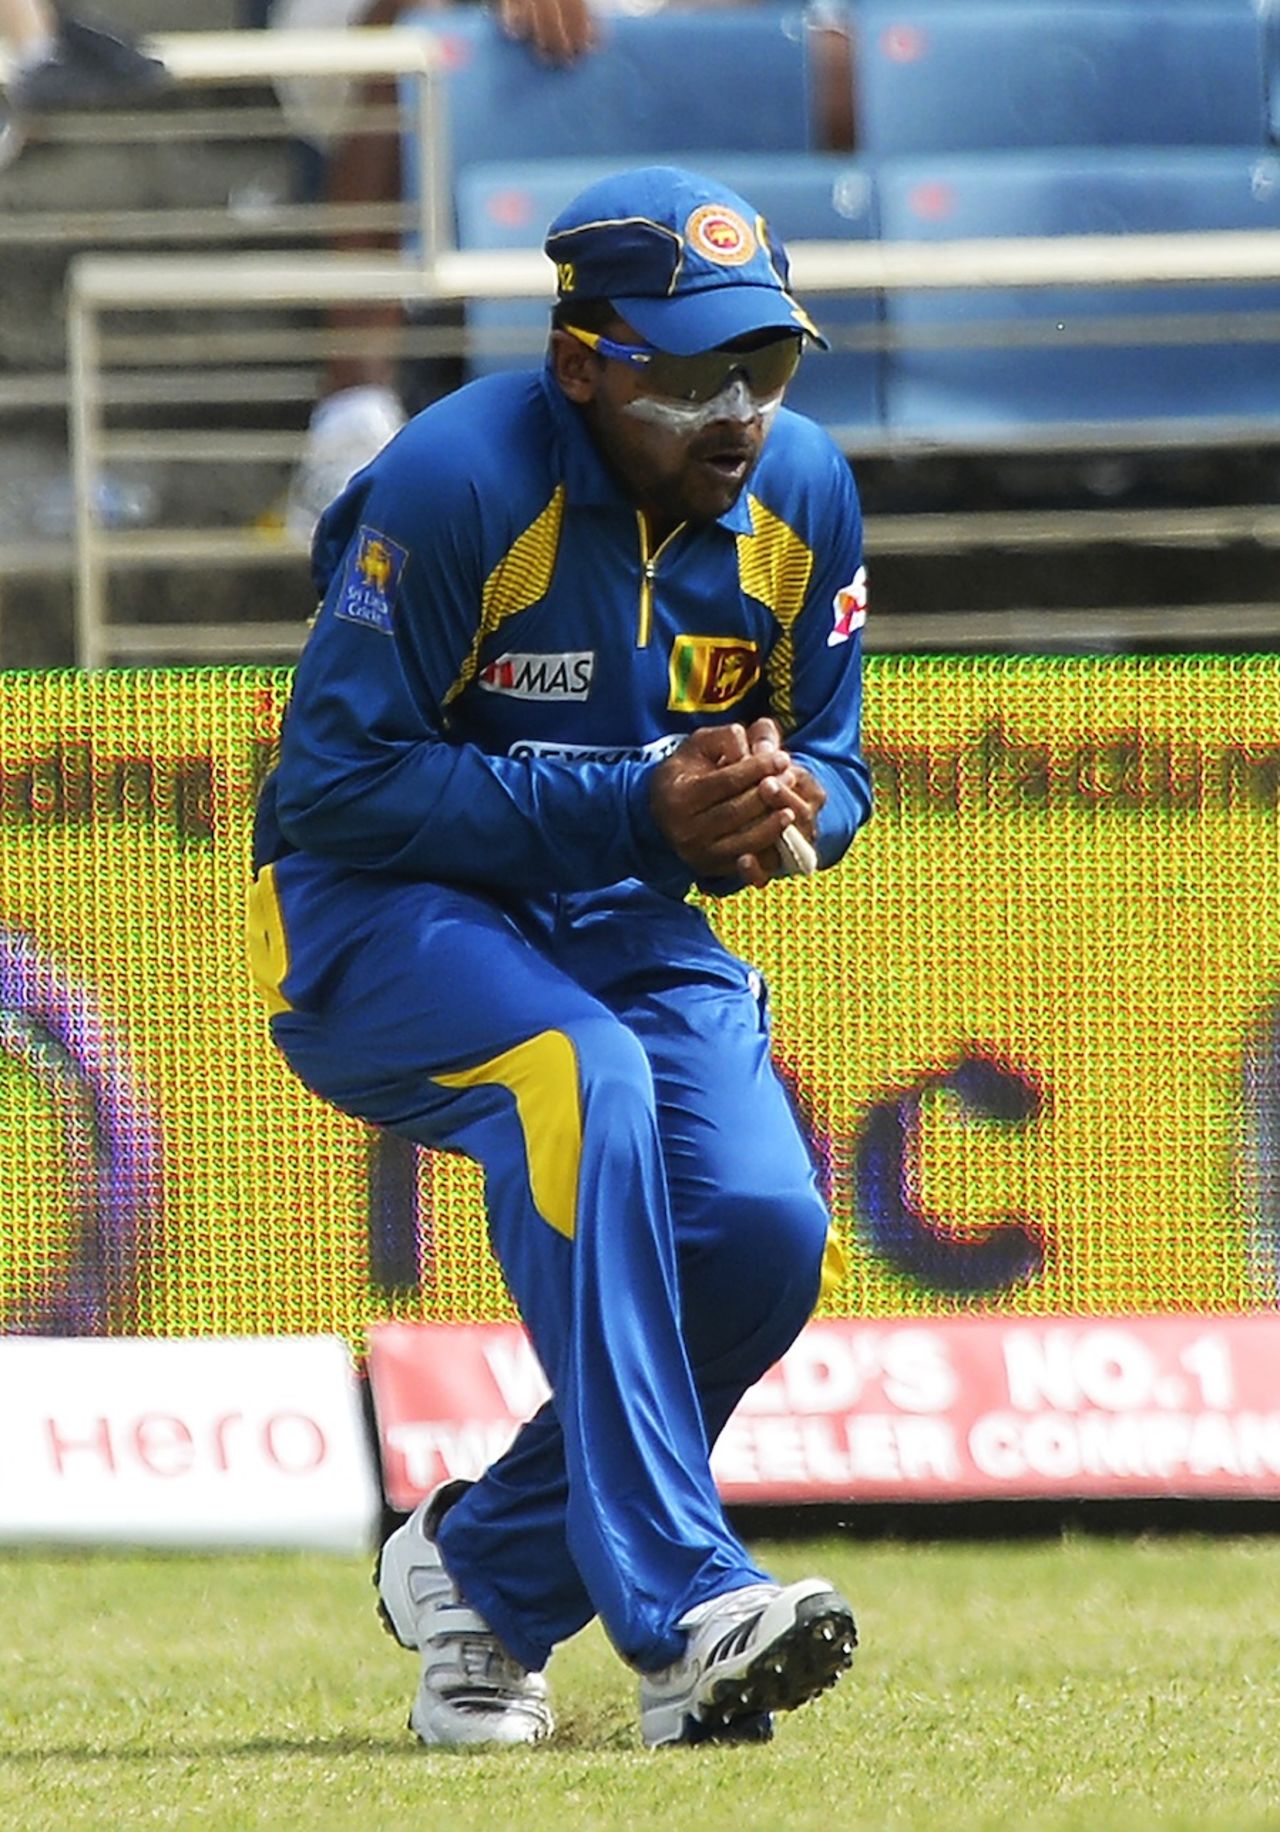 Mahela Jayawardene takes a catch to dismiss Johnson Charles, West Indies v Sri Lanka, 1st ODI, Kingston, June 28, 2013